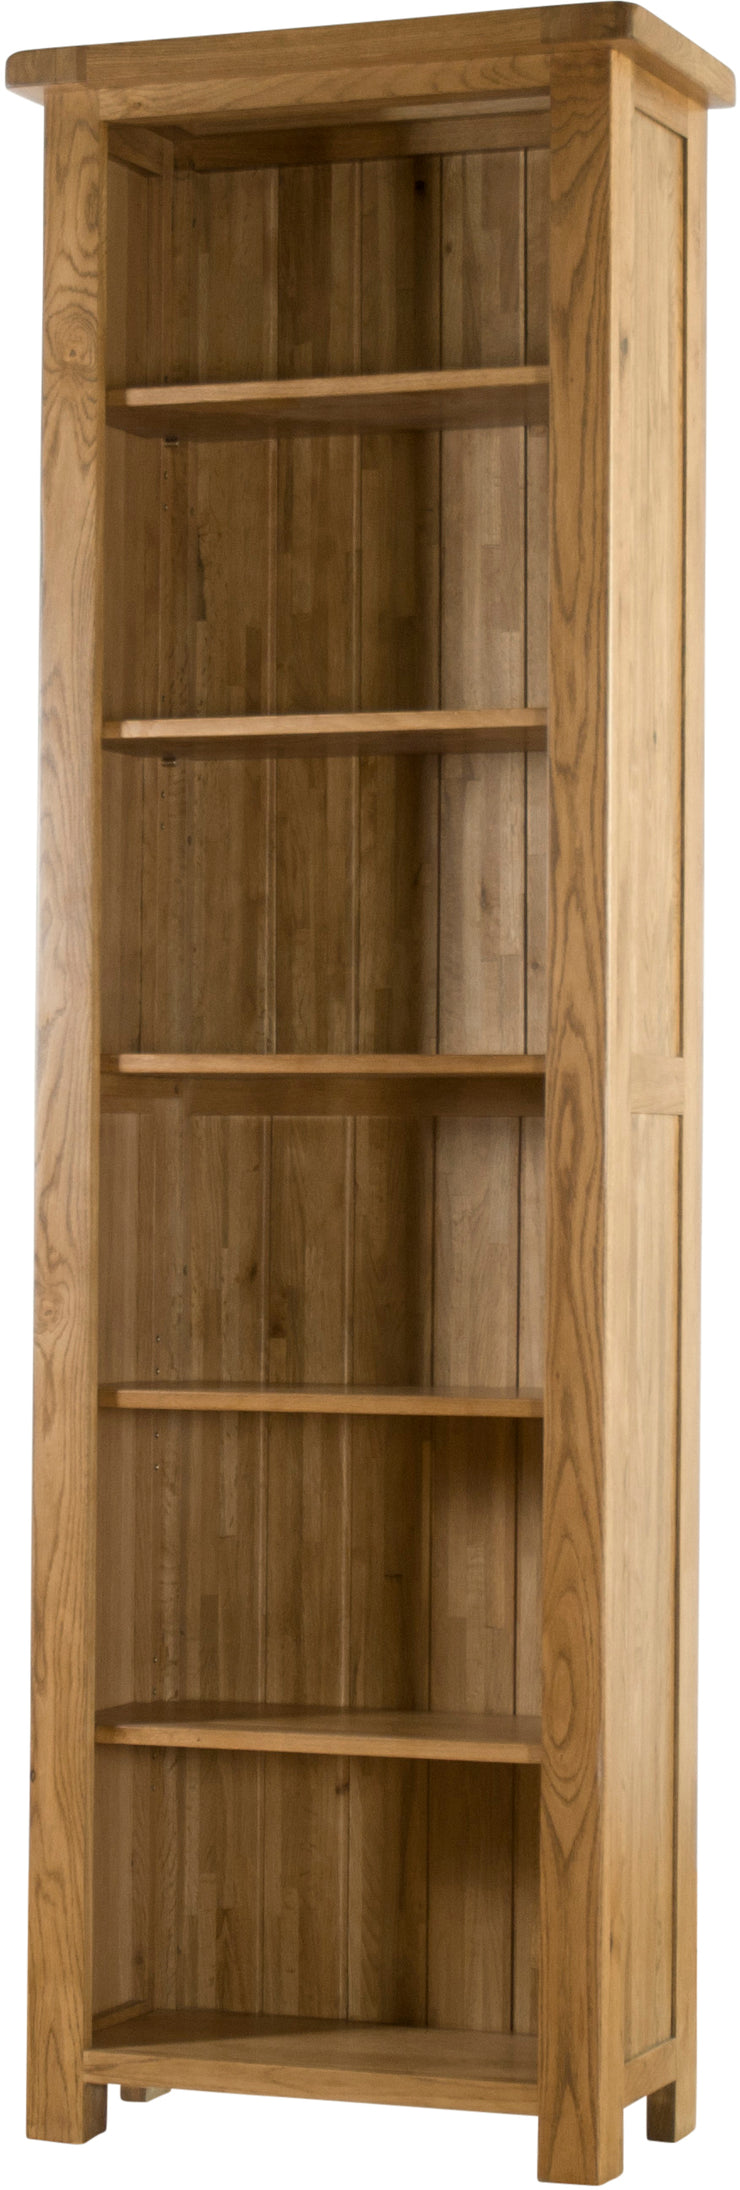 Deluxe Rustic Oak Tall Narrow Bookcase